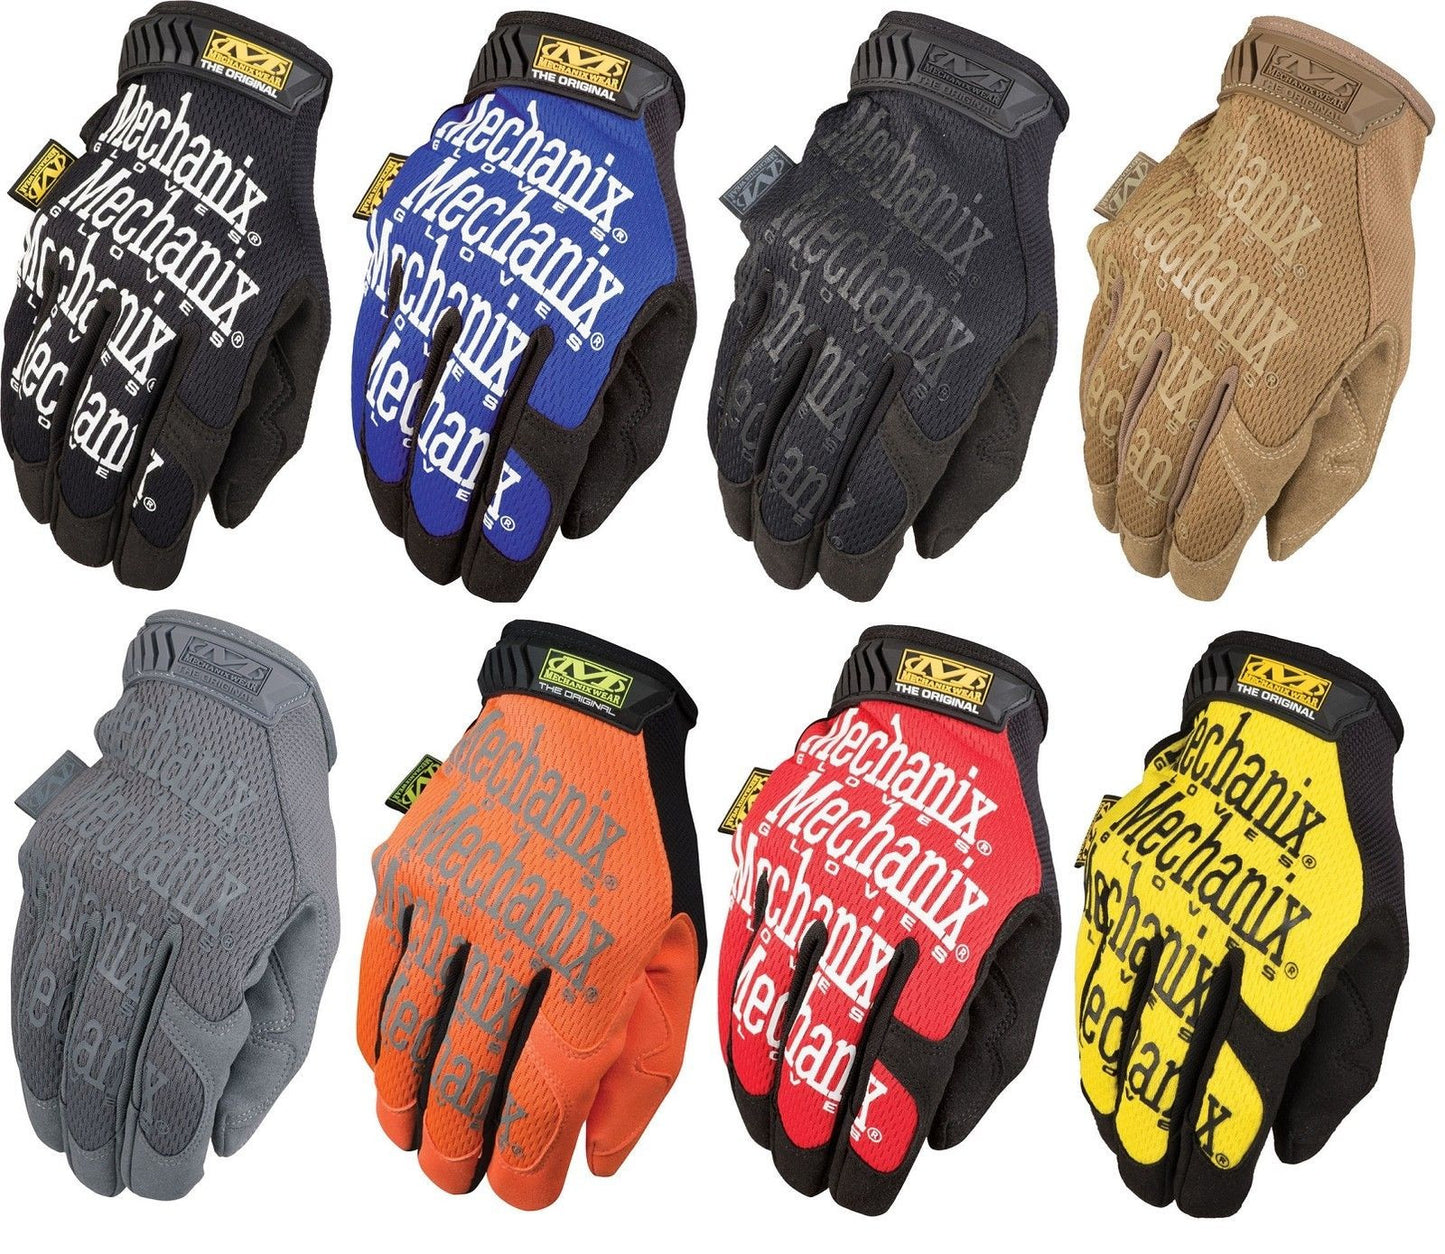 Mechanix Wear The Original Multi-Purpose Glove - Mens Repair & Field Work Gloves